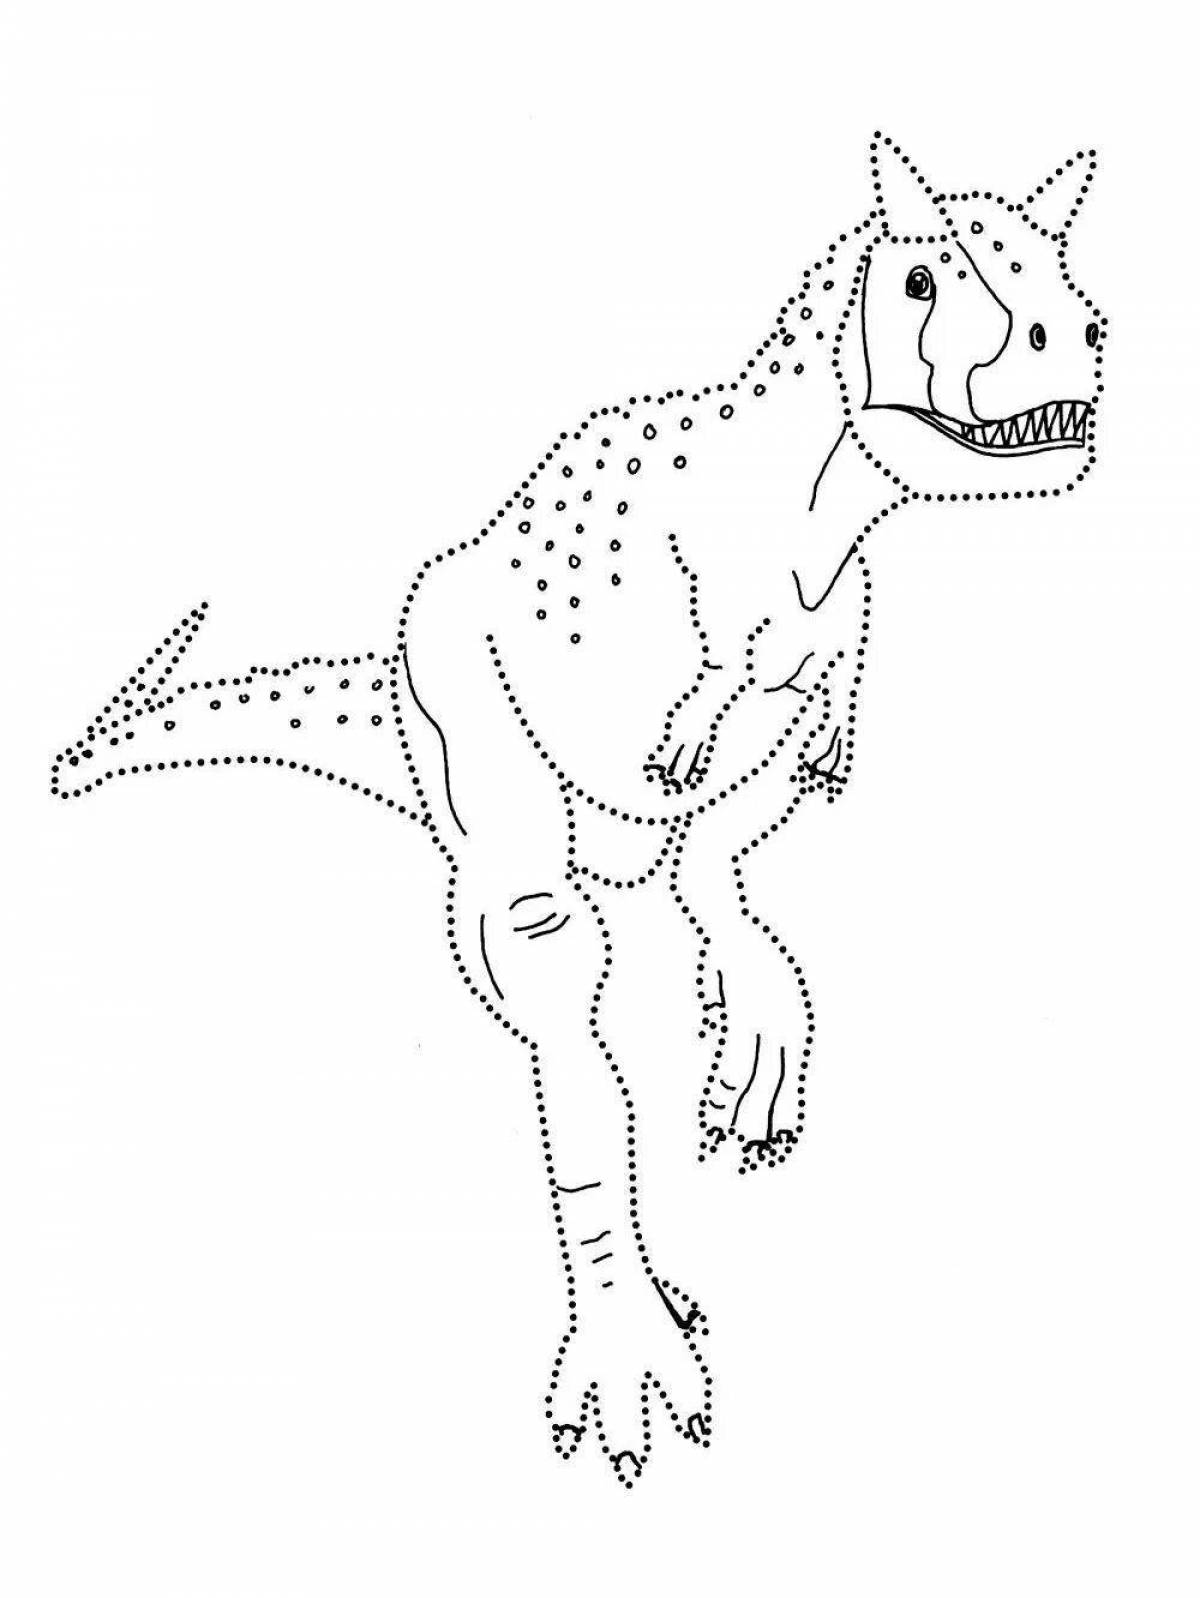 Royal carnotaurus coloring page